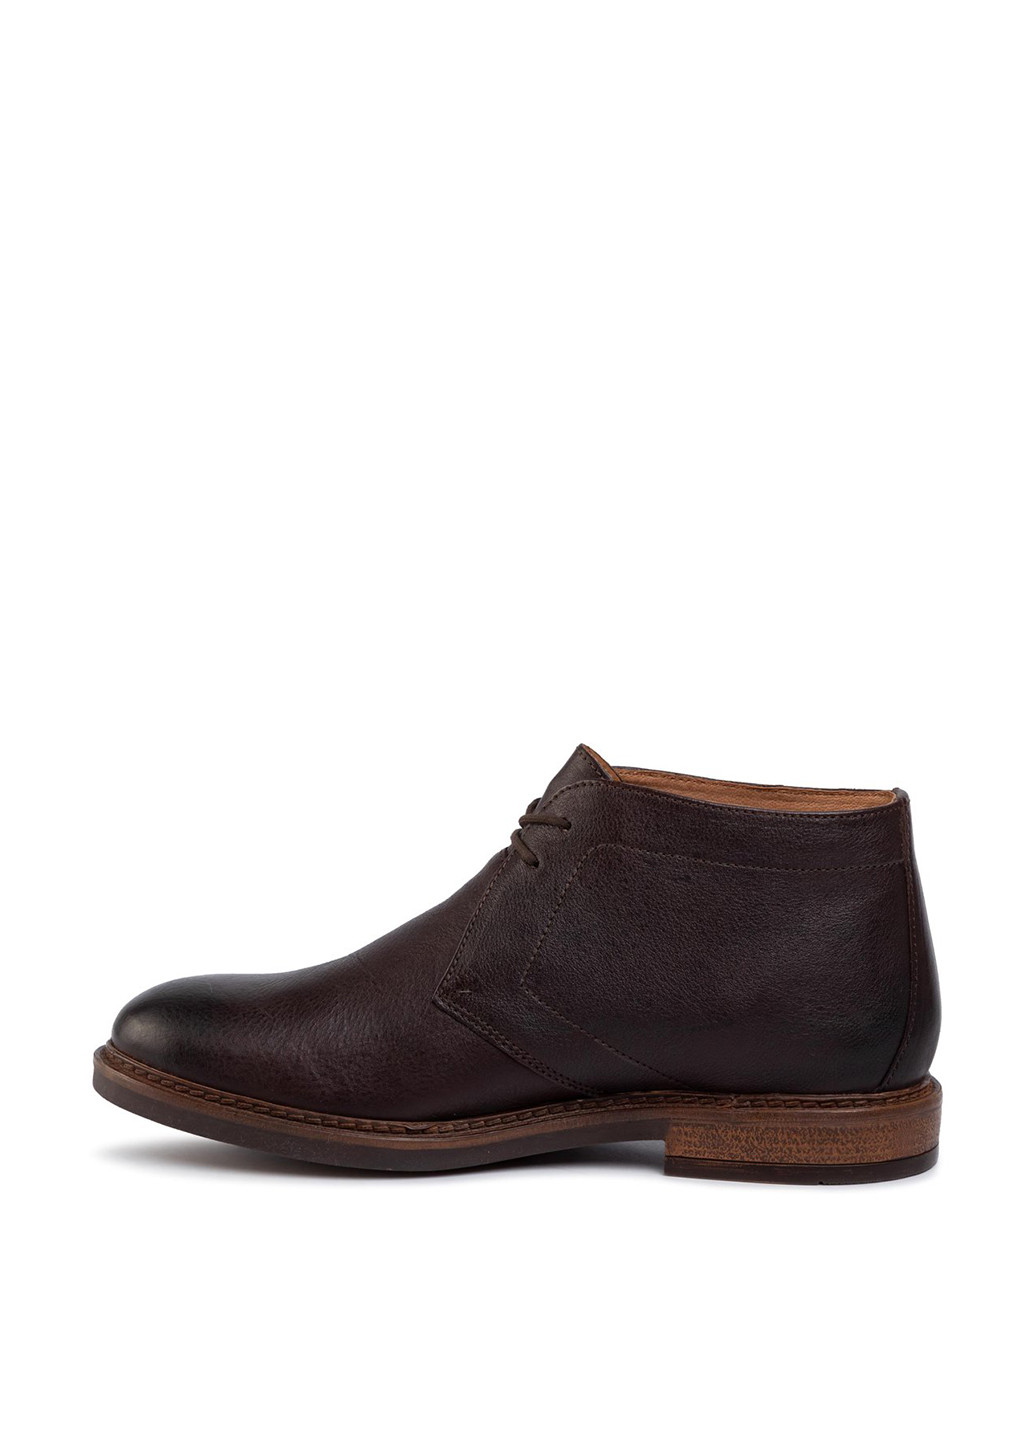 Темно-коричневые осенние черевики gino rossi mi08-c641-639-04 Gino Rossi